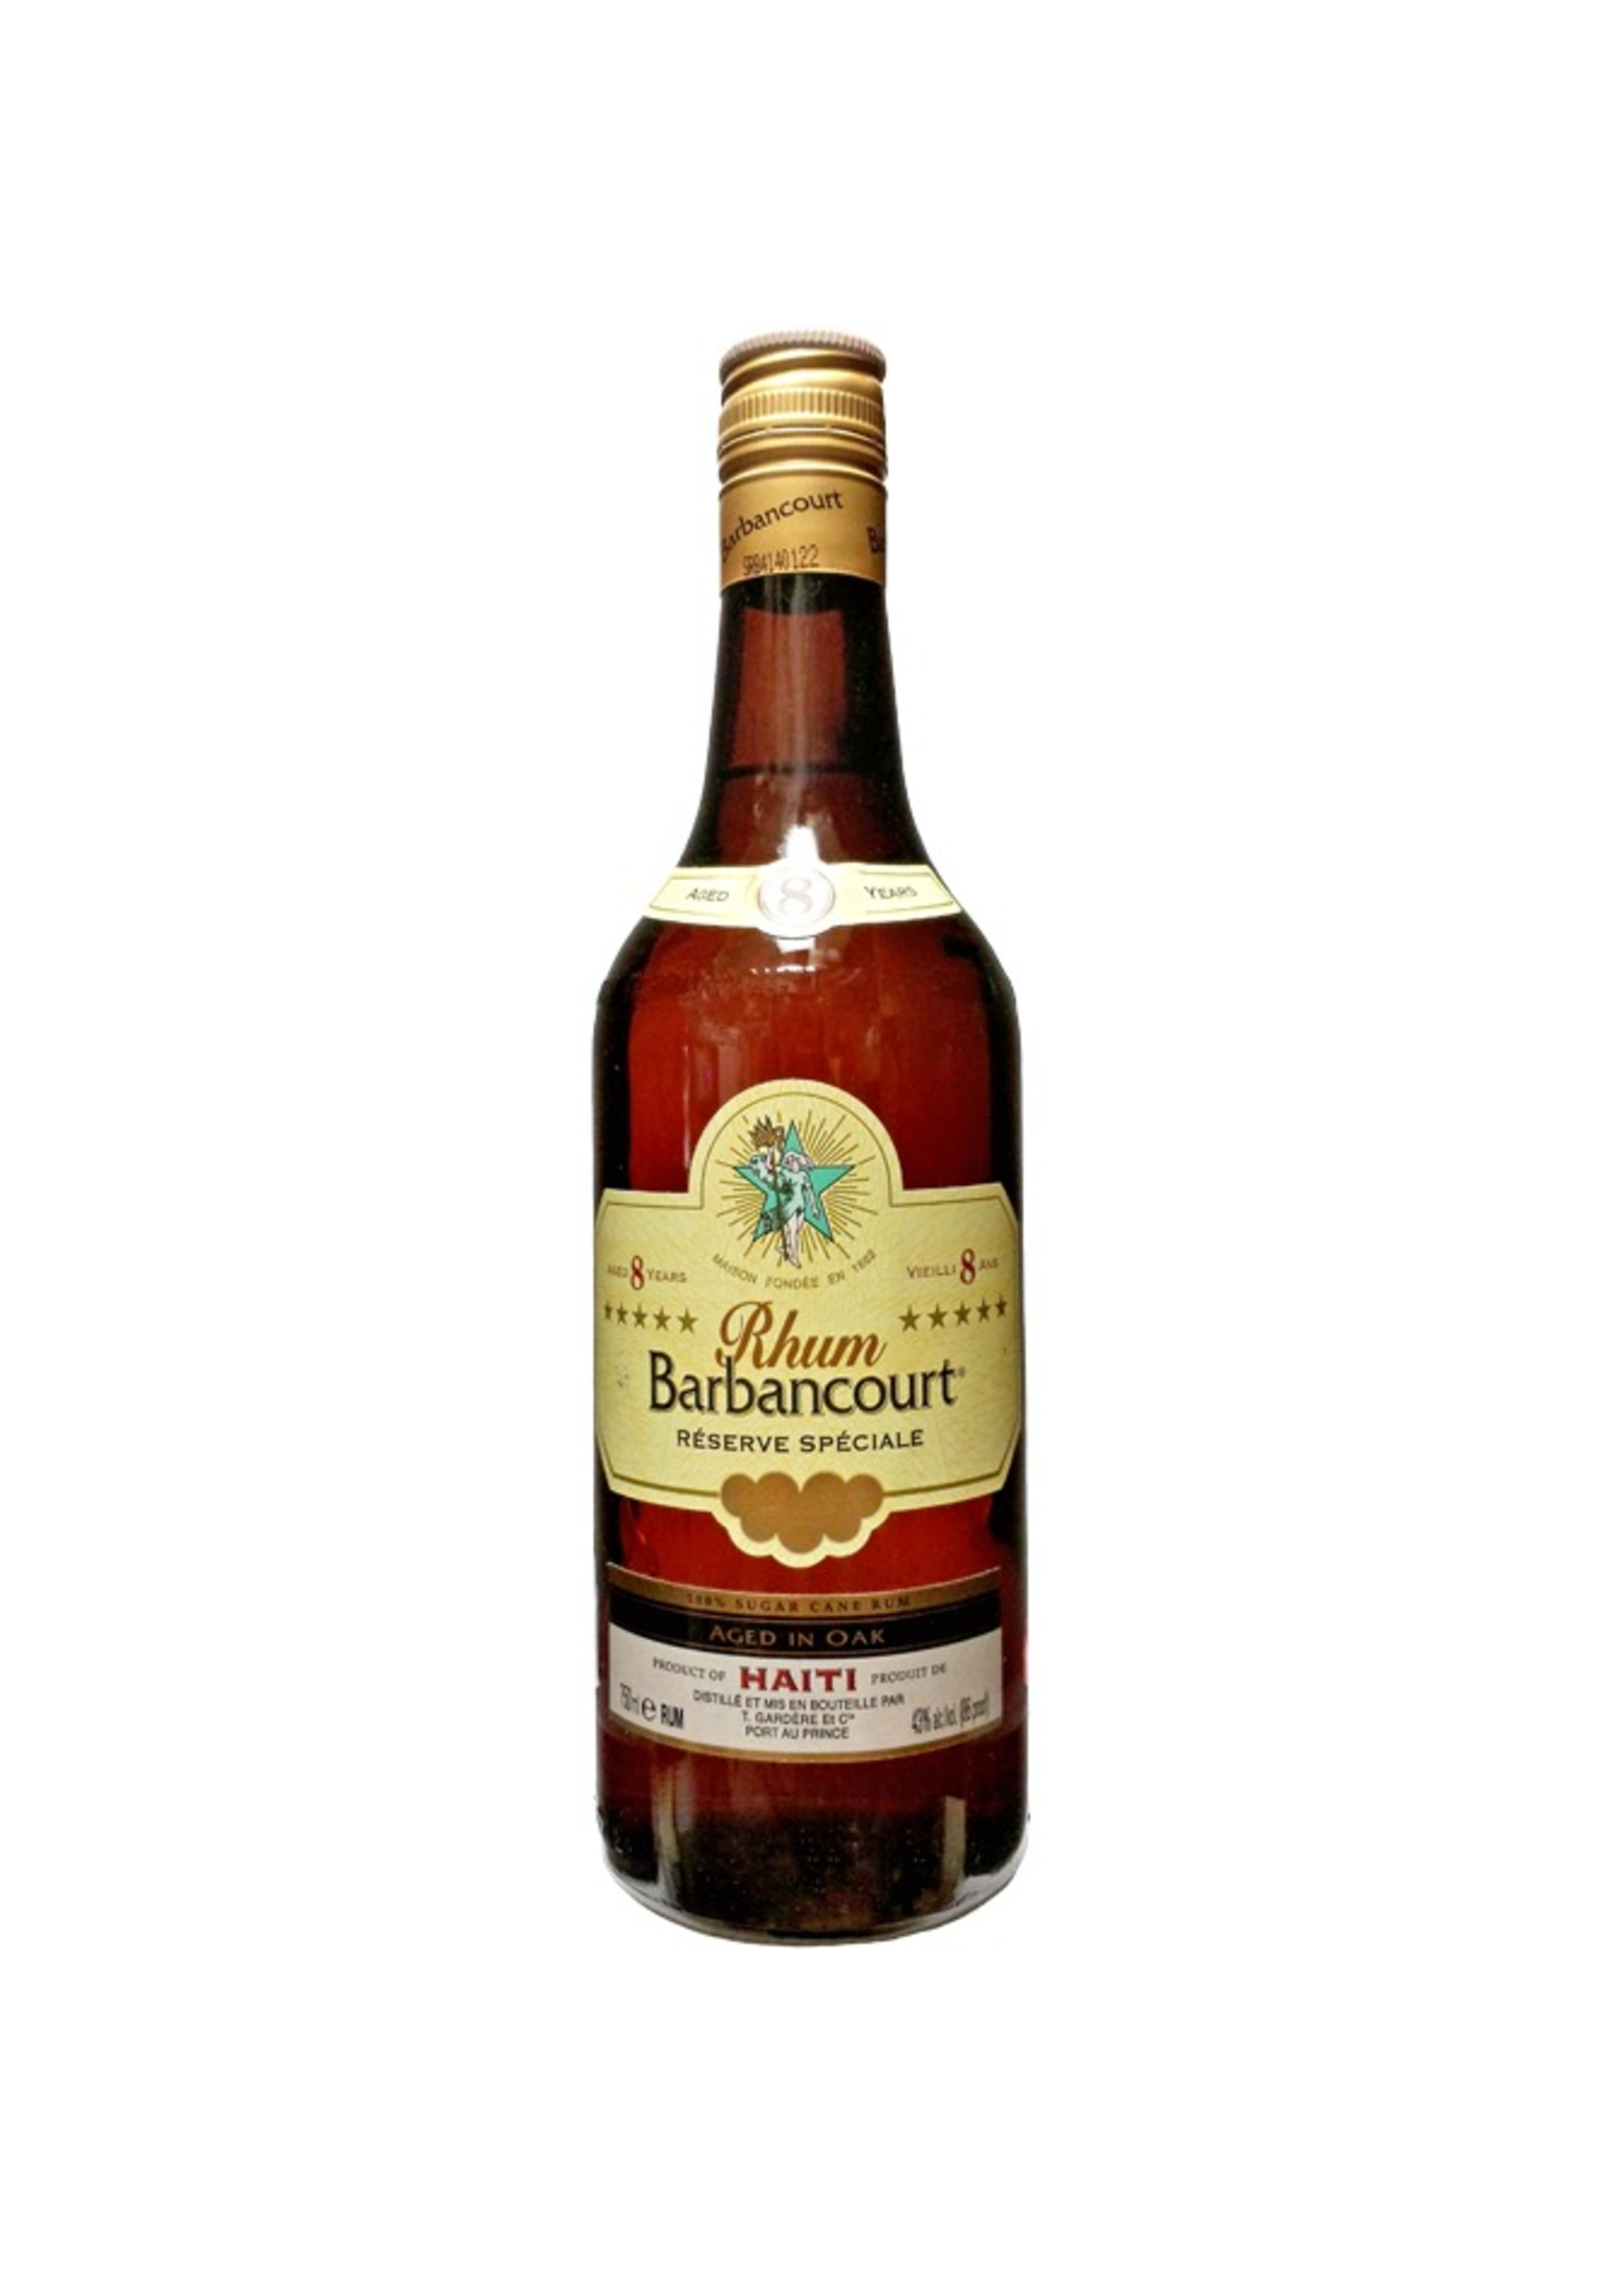 Barbancourt Rhum Barbancourt / 5 Star Rum